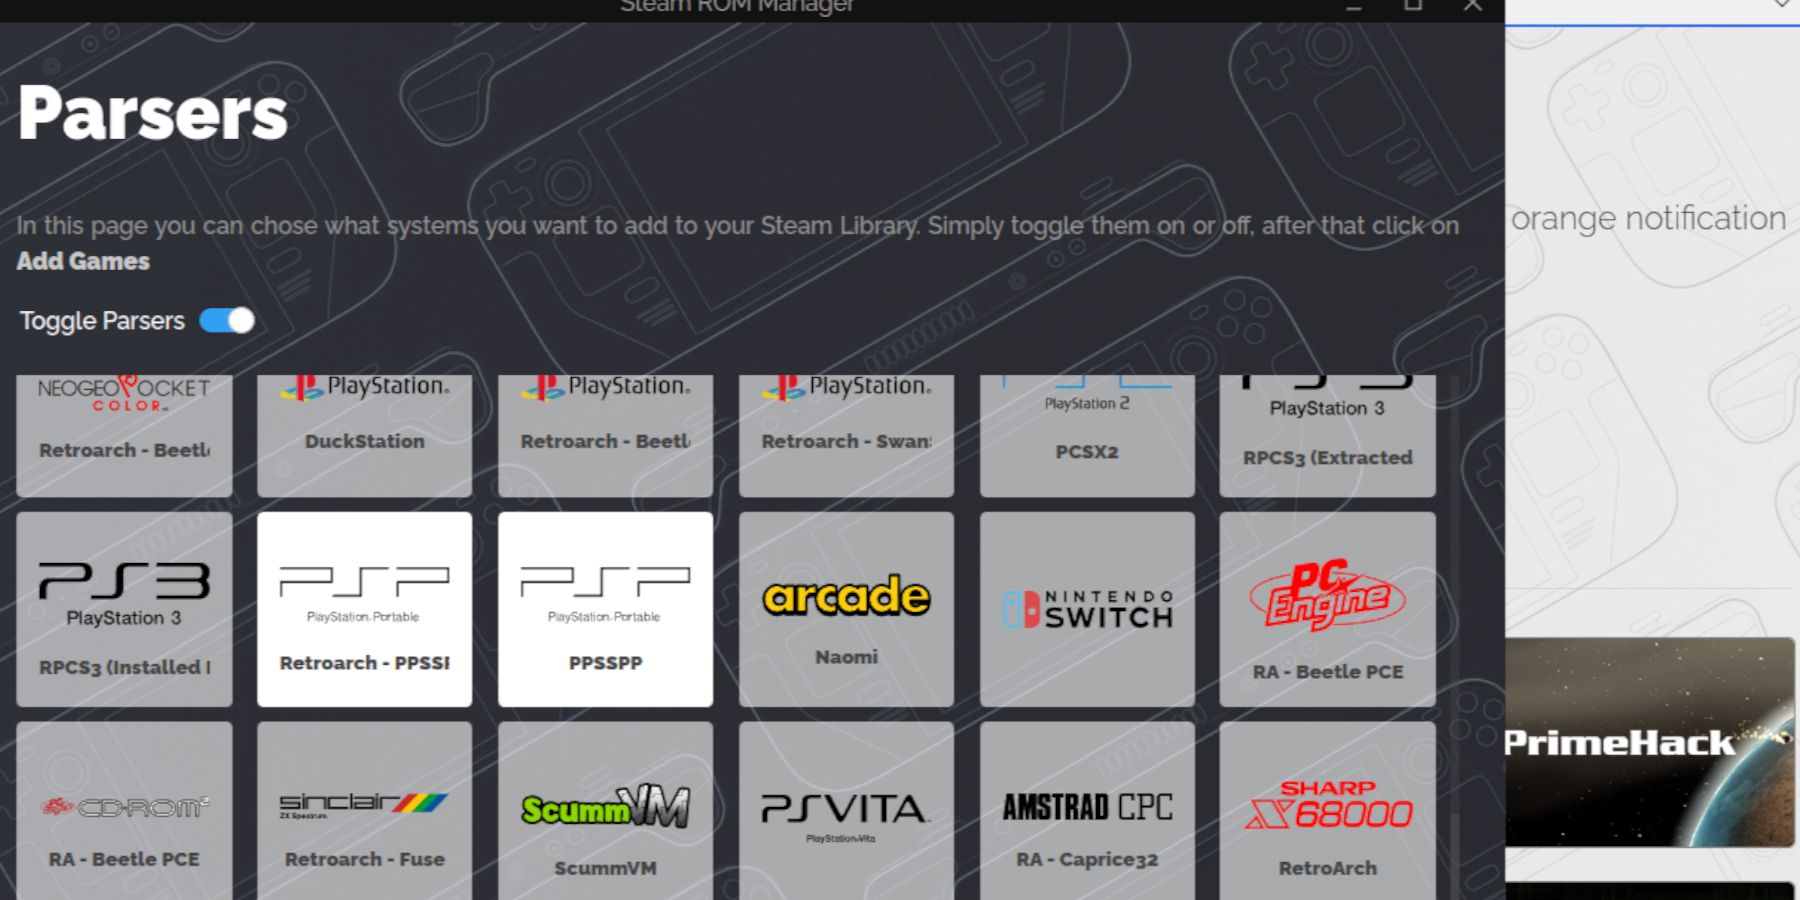 Highlighting the PSP Emulators on the Steam Deck